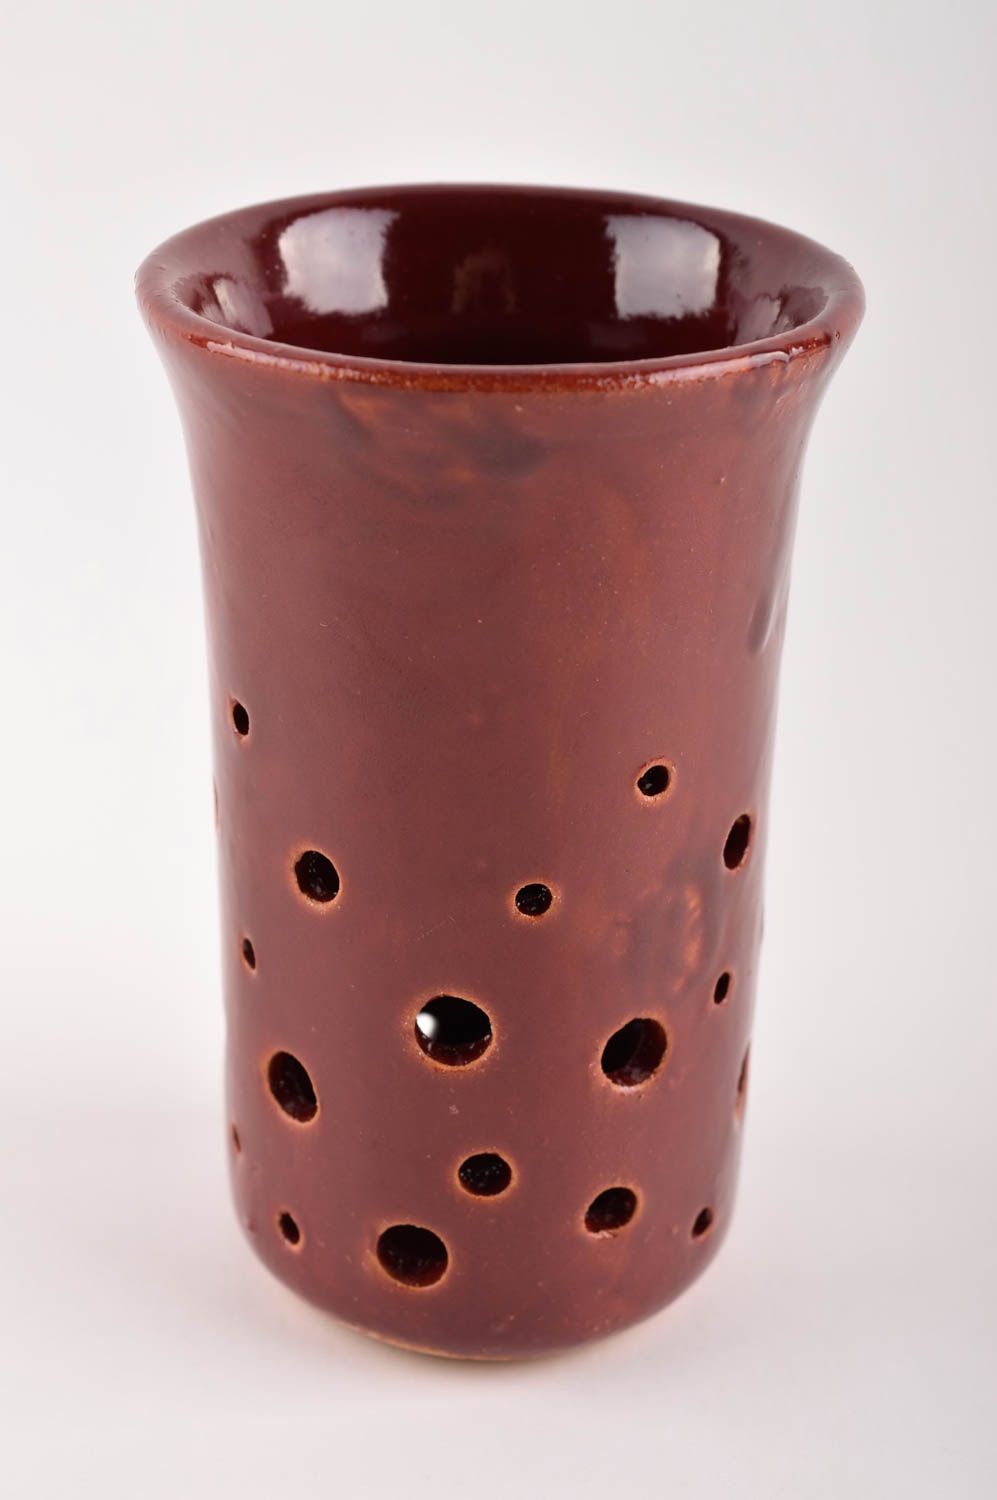 Handgemachte Keramik schöne Vase Haus Deko Idee originelles Geschenk bordeauxrot foto 2